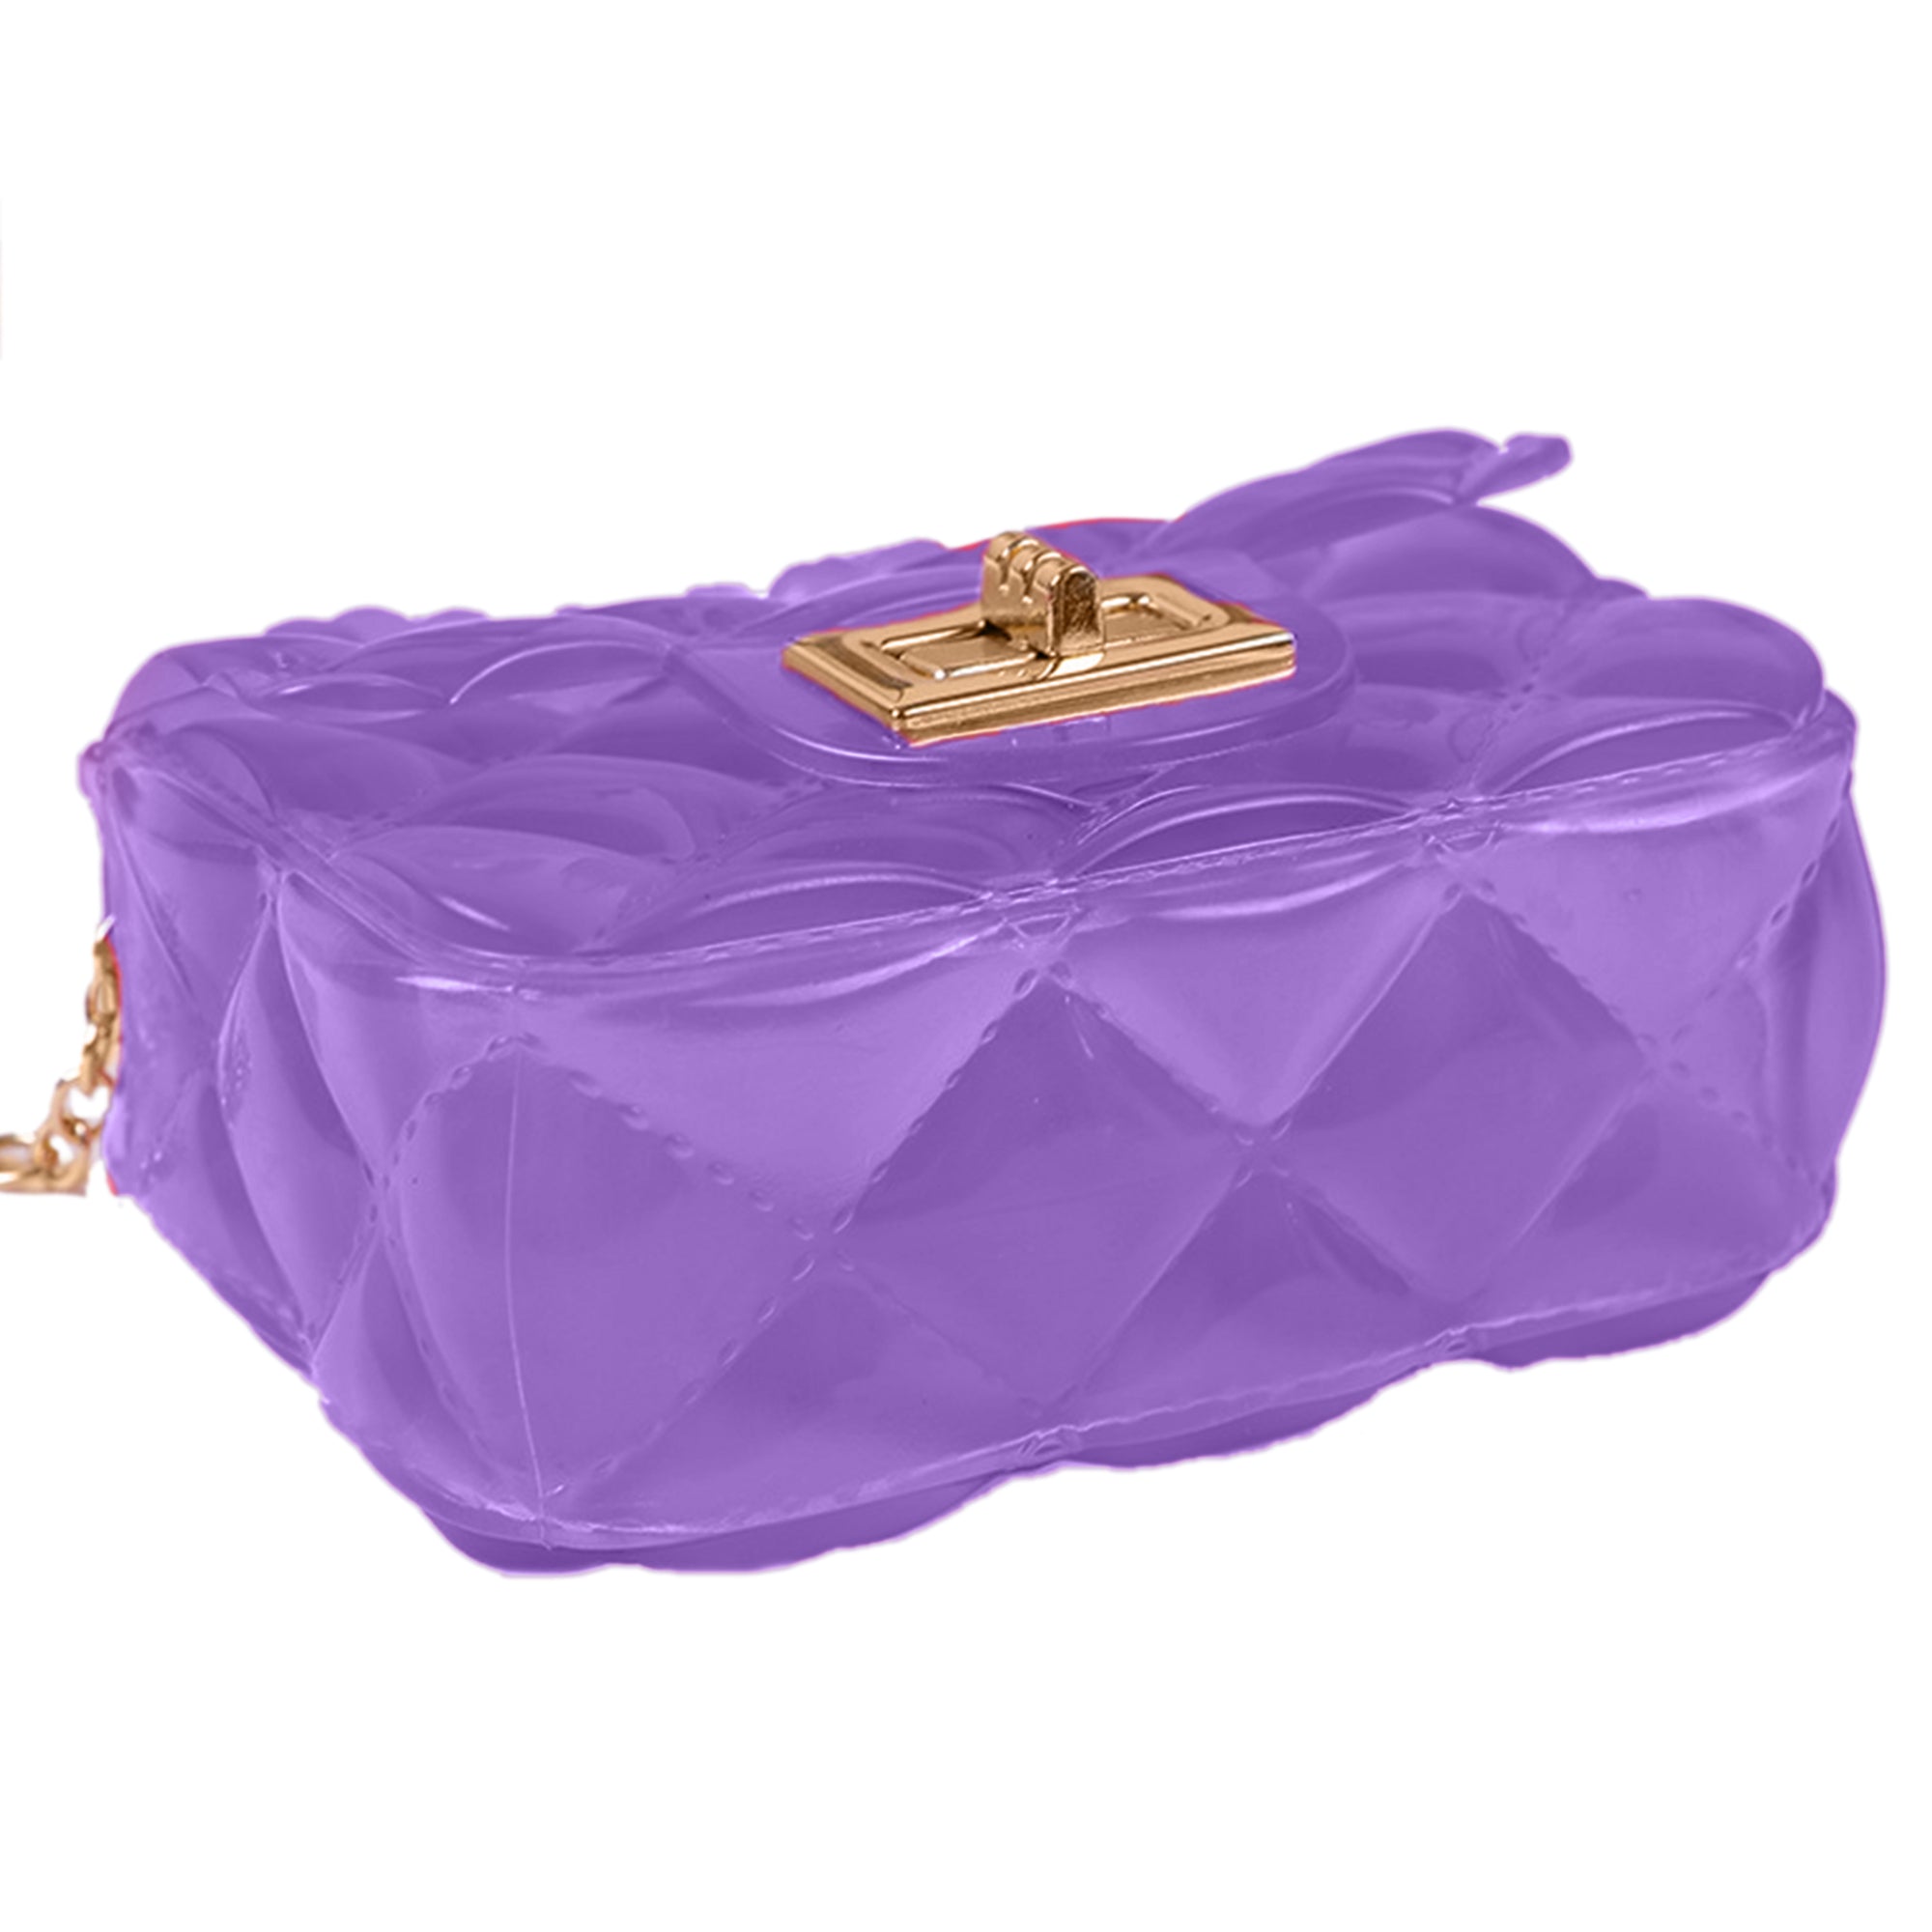 Buy Newphoria P06 Purple Purse Women Fashion Stylish Handbags, nylon  quilted pattern, soft touch Handbag for Girls at Amazon.in